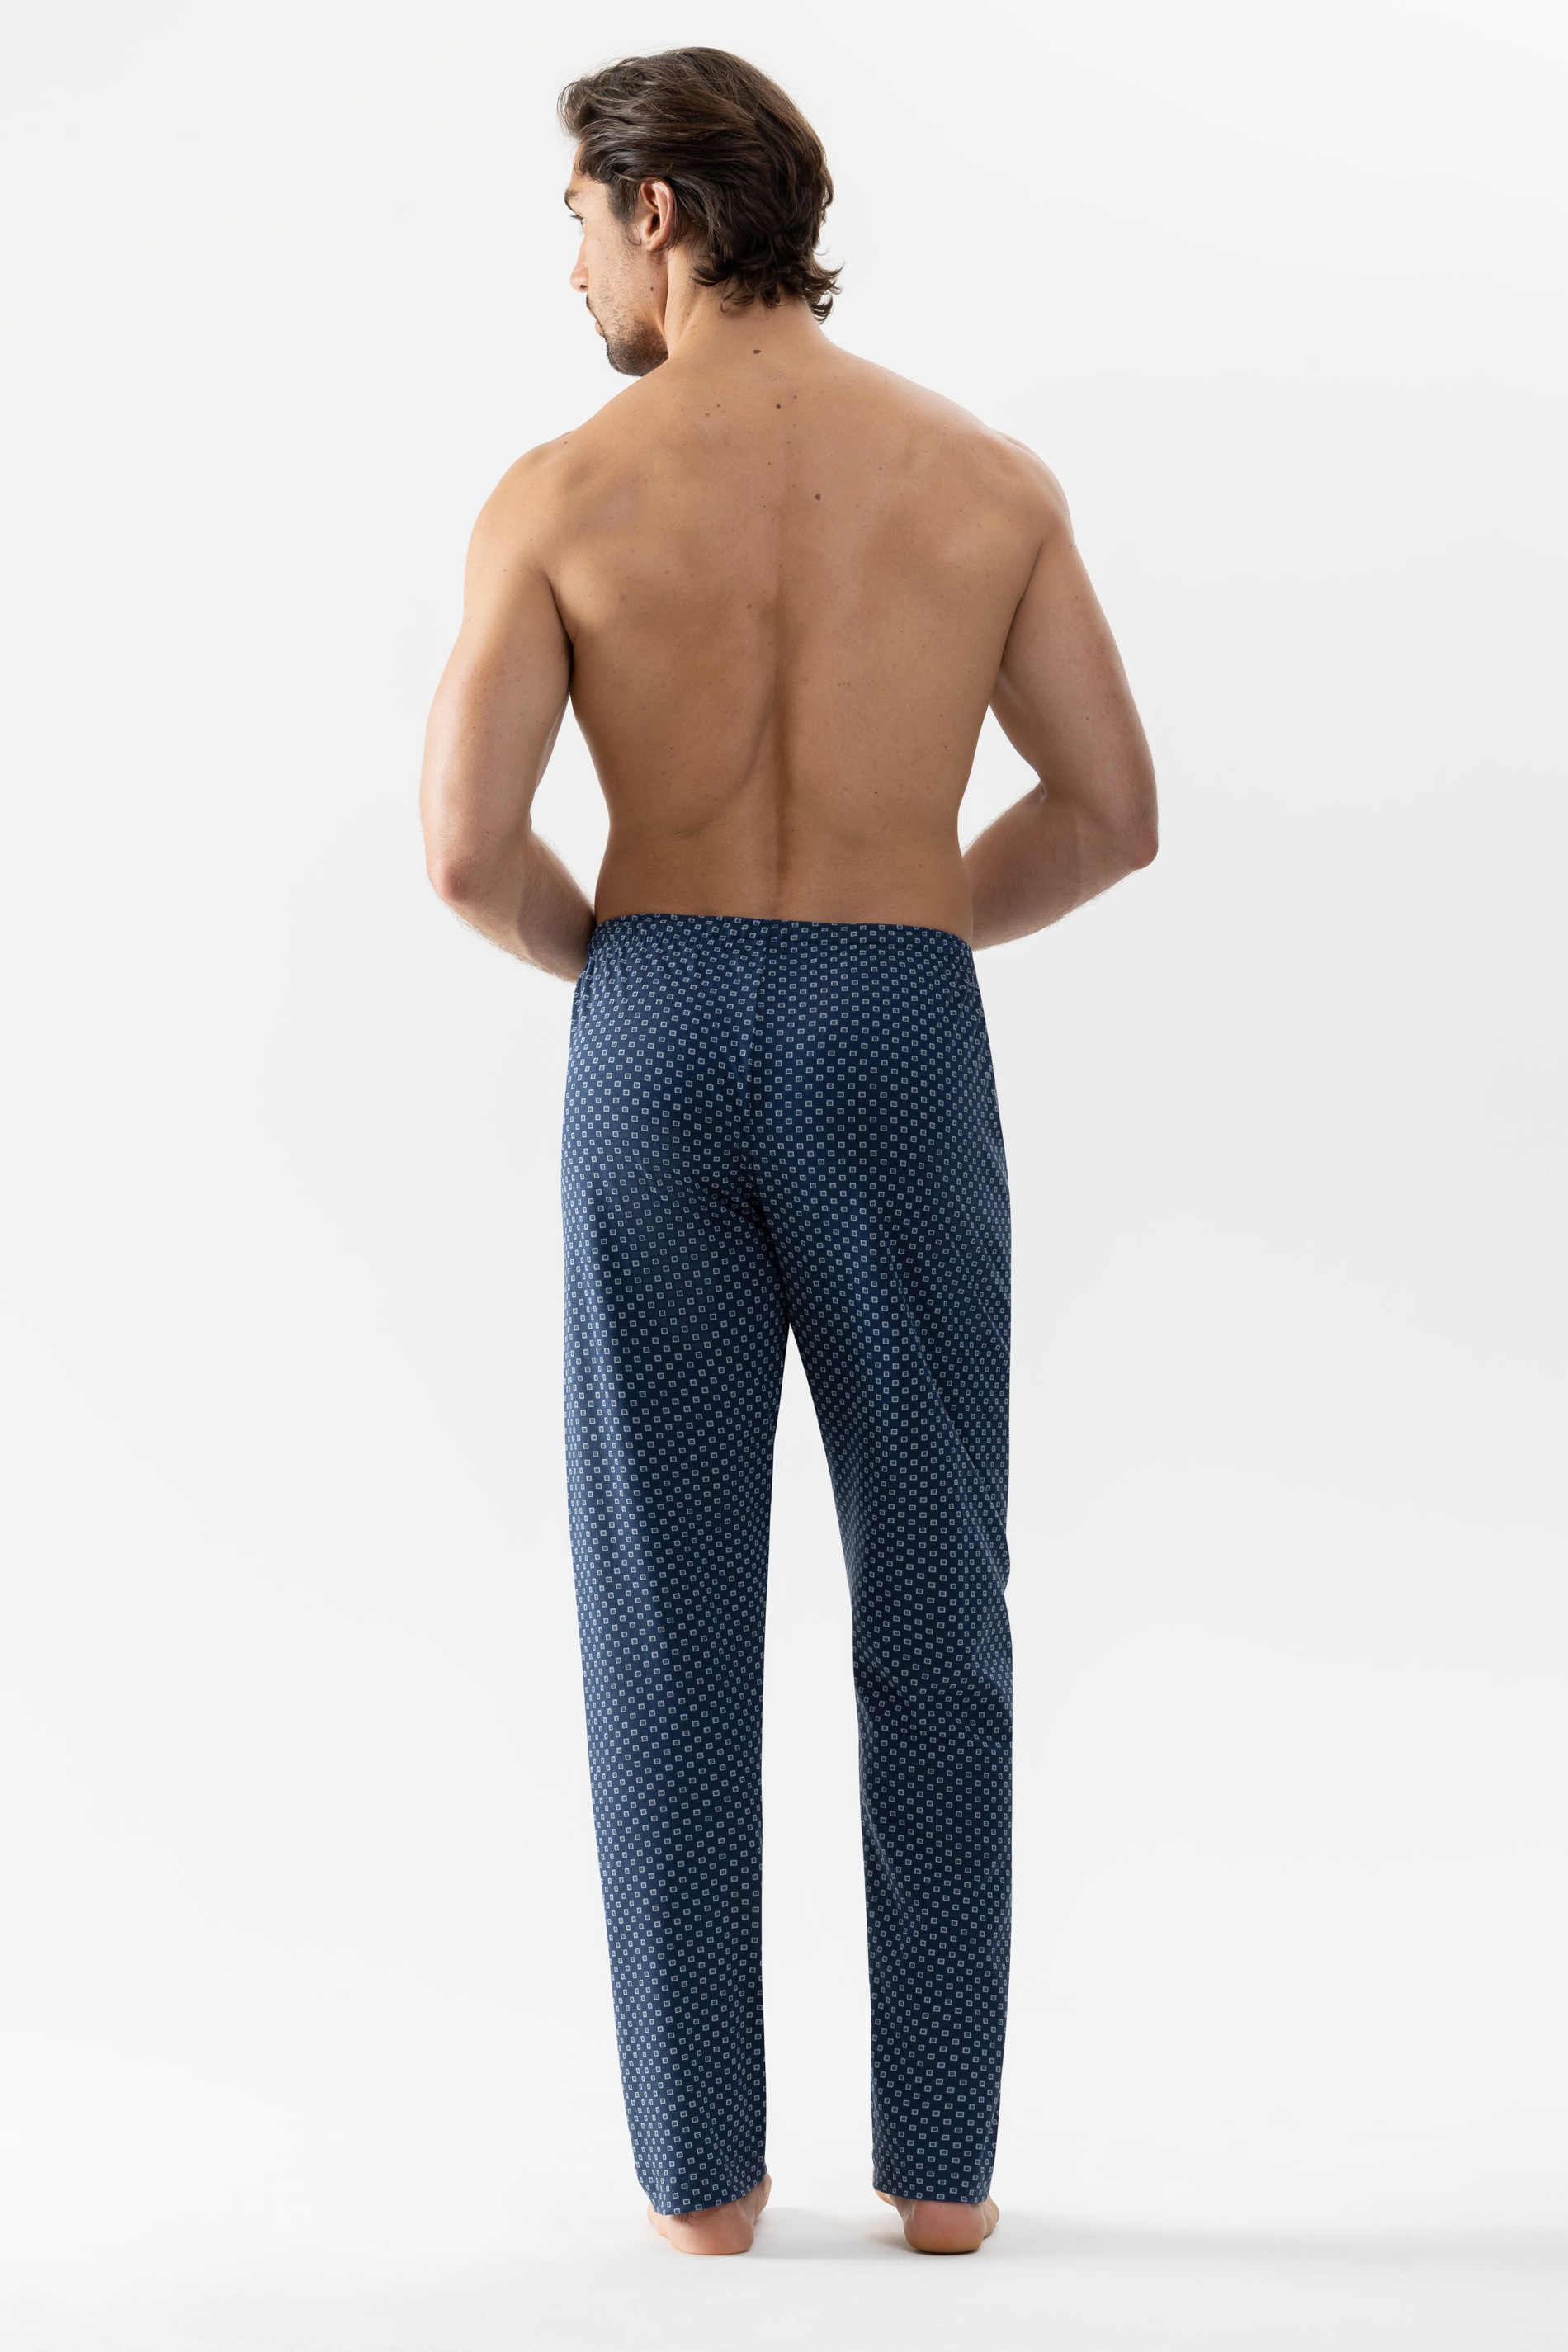 Long trousers Neptune Serie Gisborne Rear View | mey®